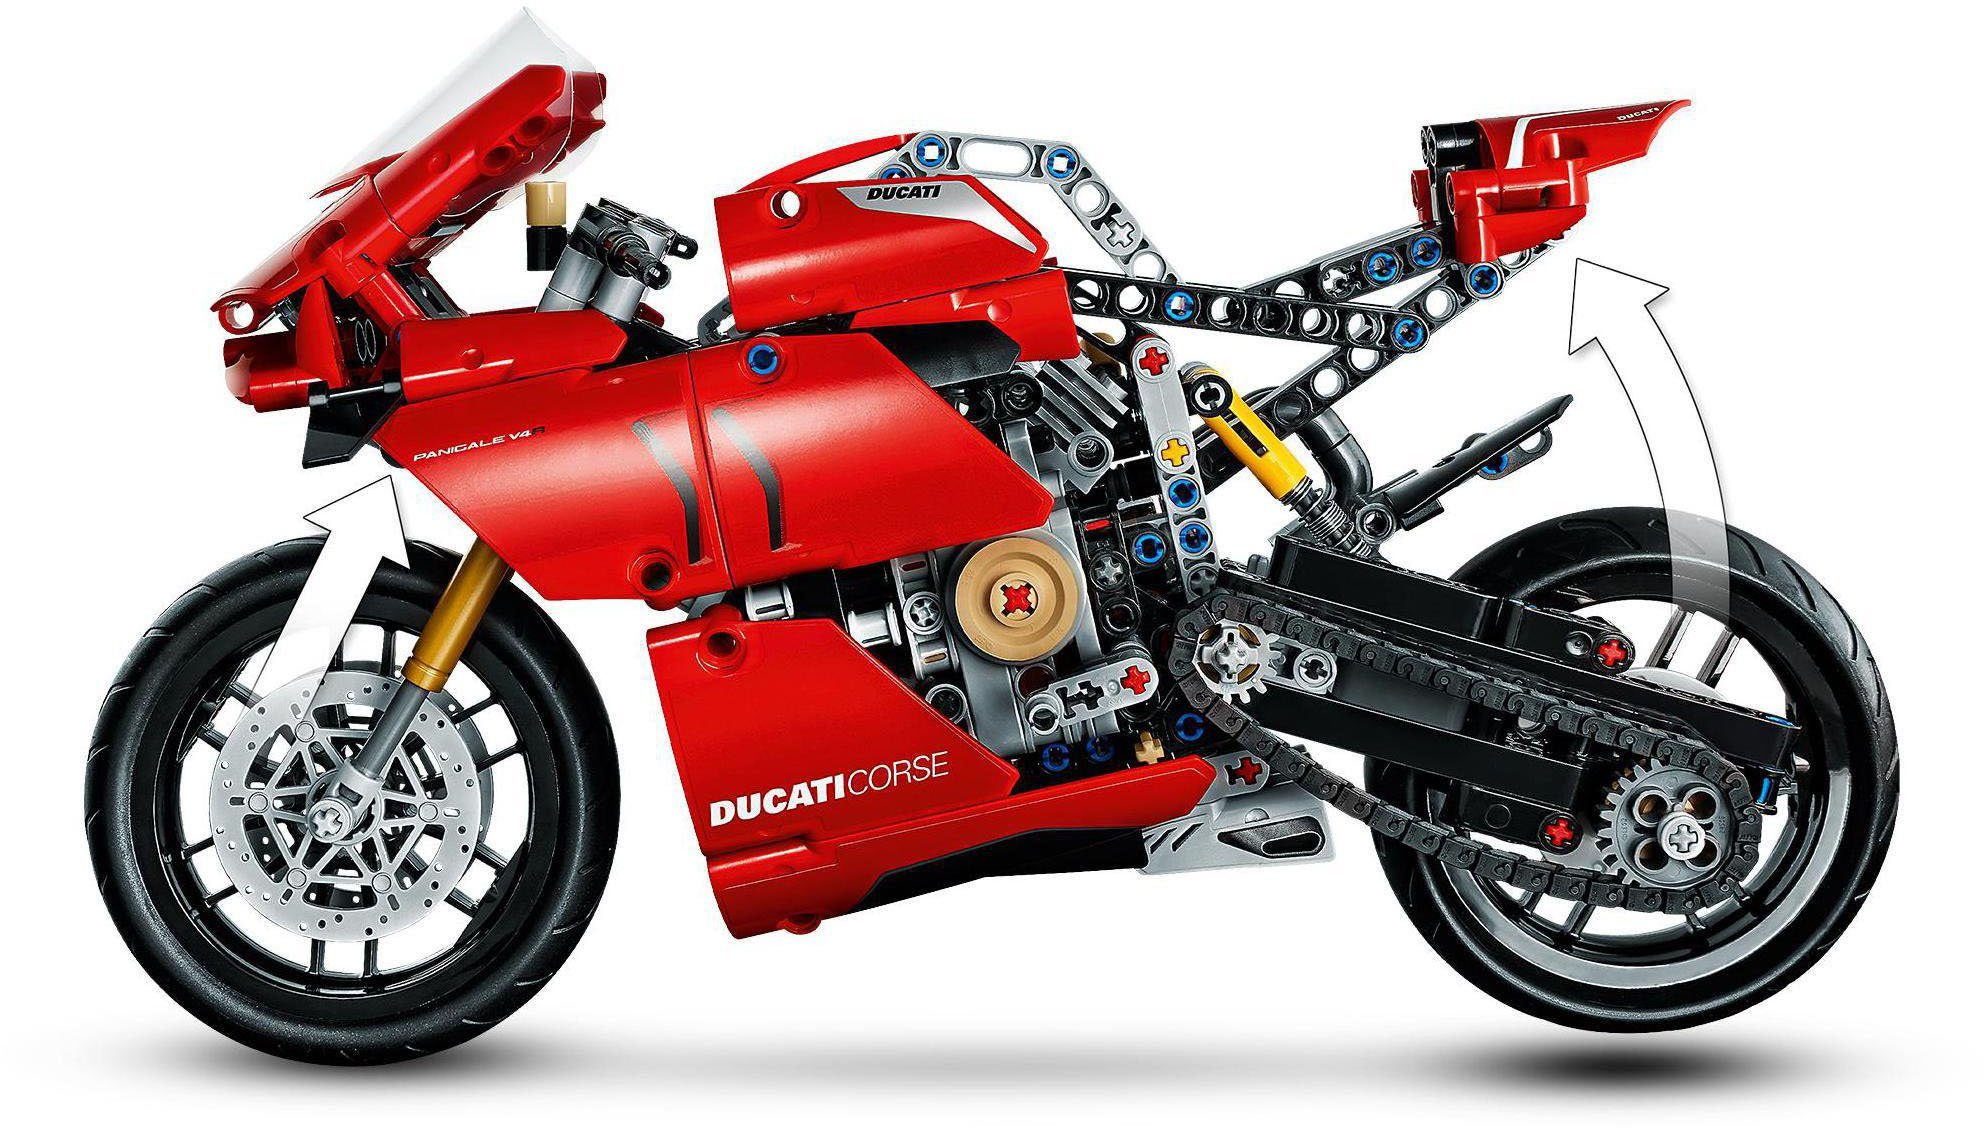 Technic, V4 (42107), LEGO® (646 Ducati Europe LEGO® R Konstruktionsspielsteine in Made Panigale St),